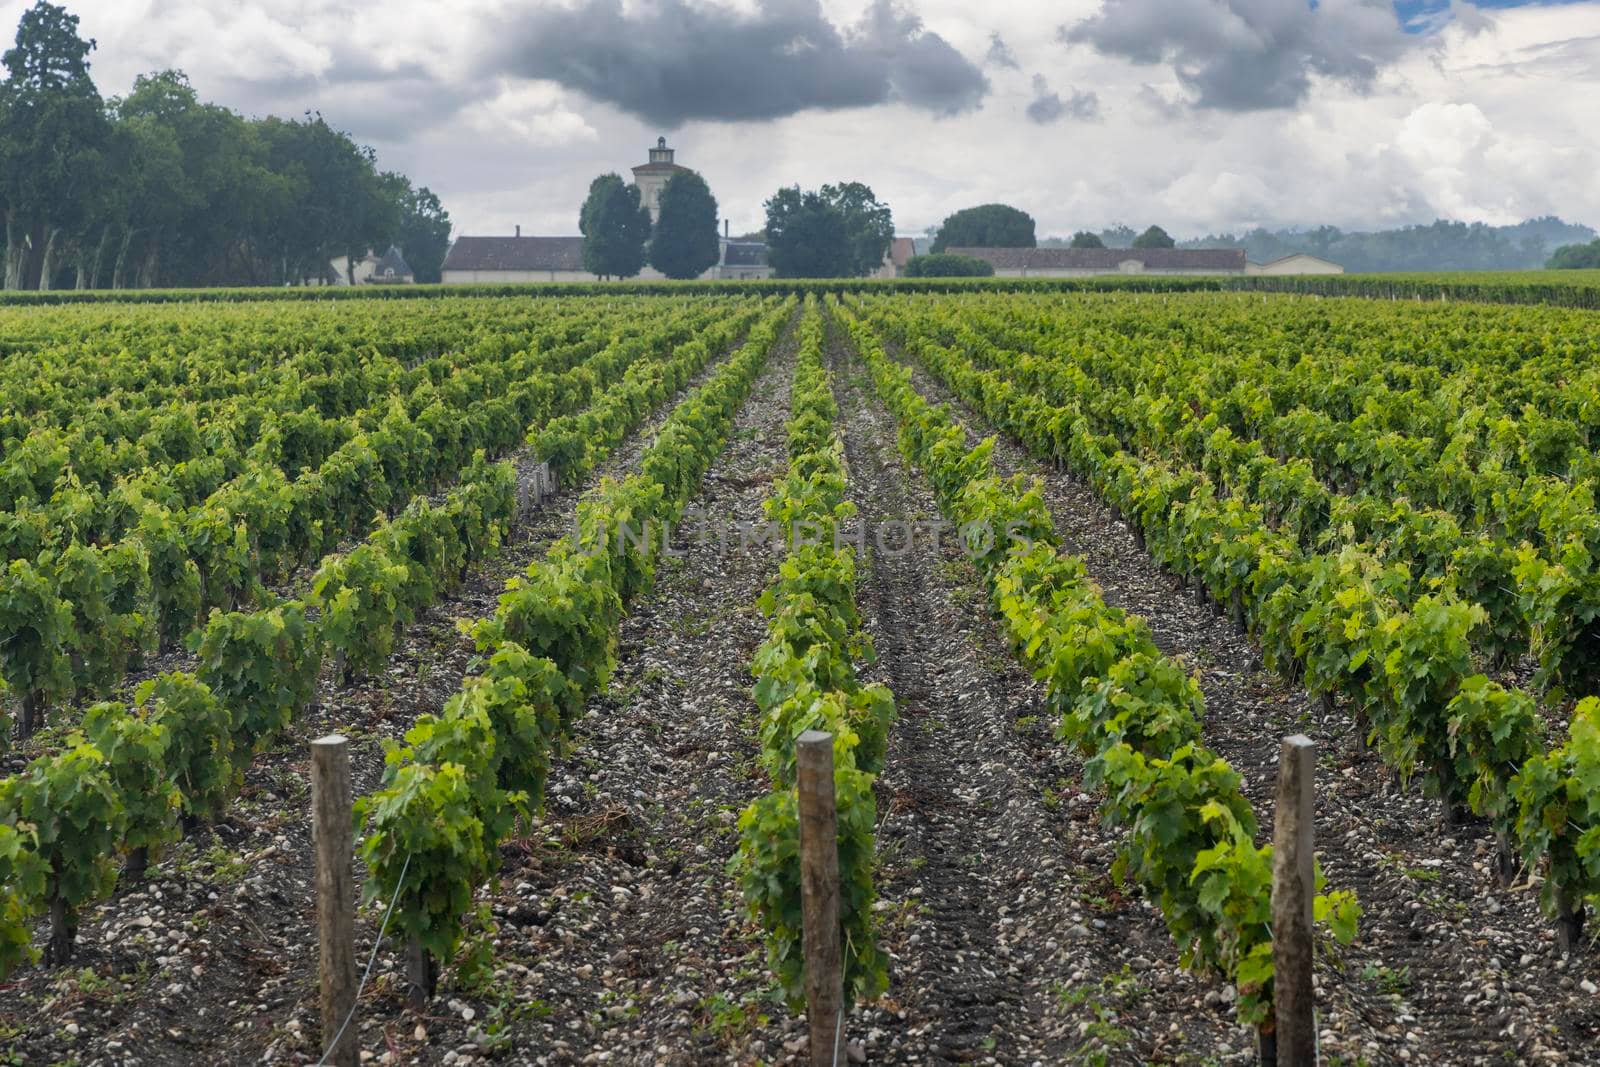 Typical vineyards near Chateau Lagrange, Bordeaux, Aquitaine, France by phbcz